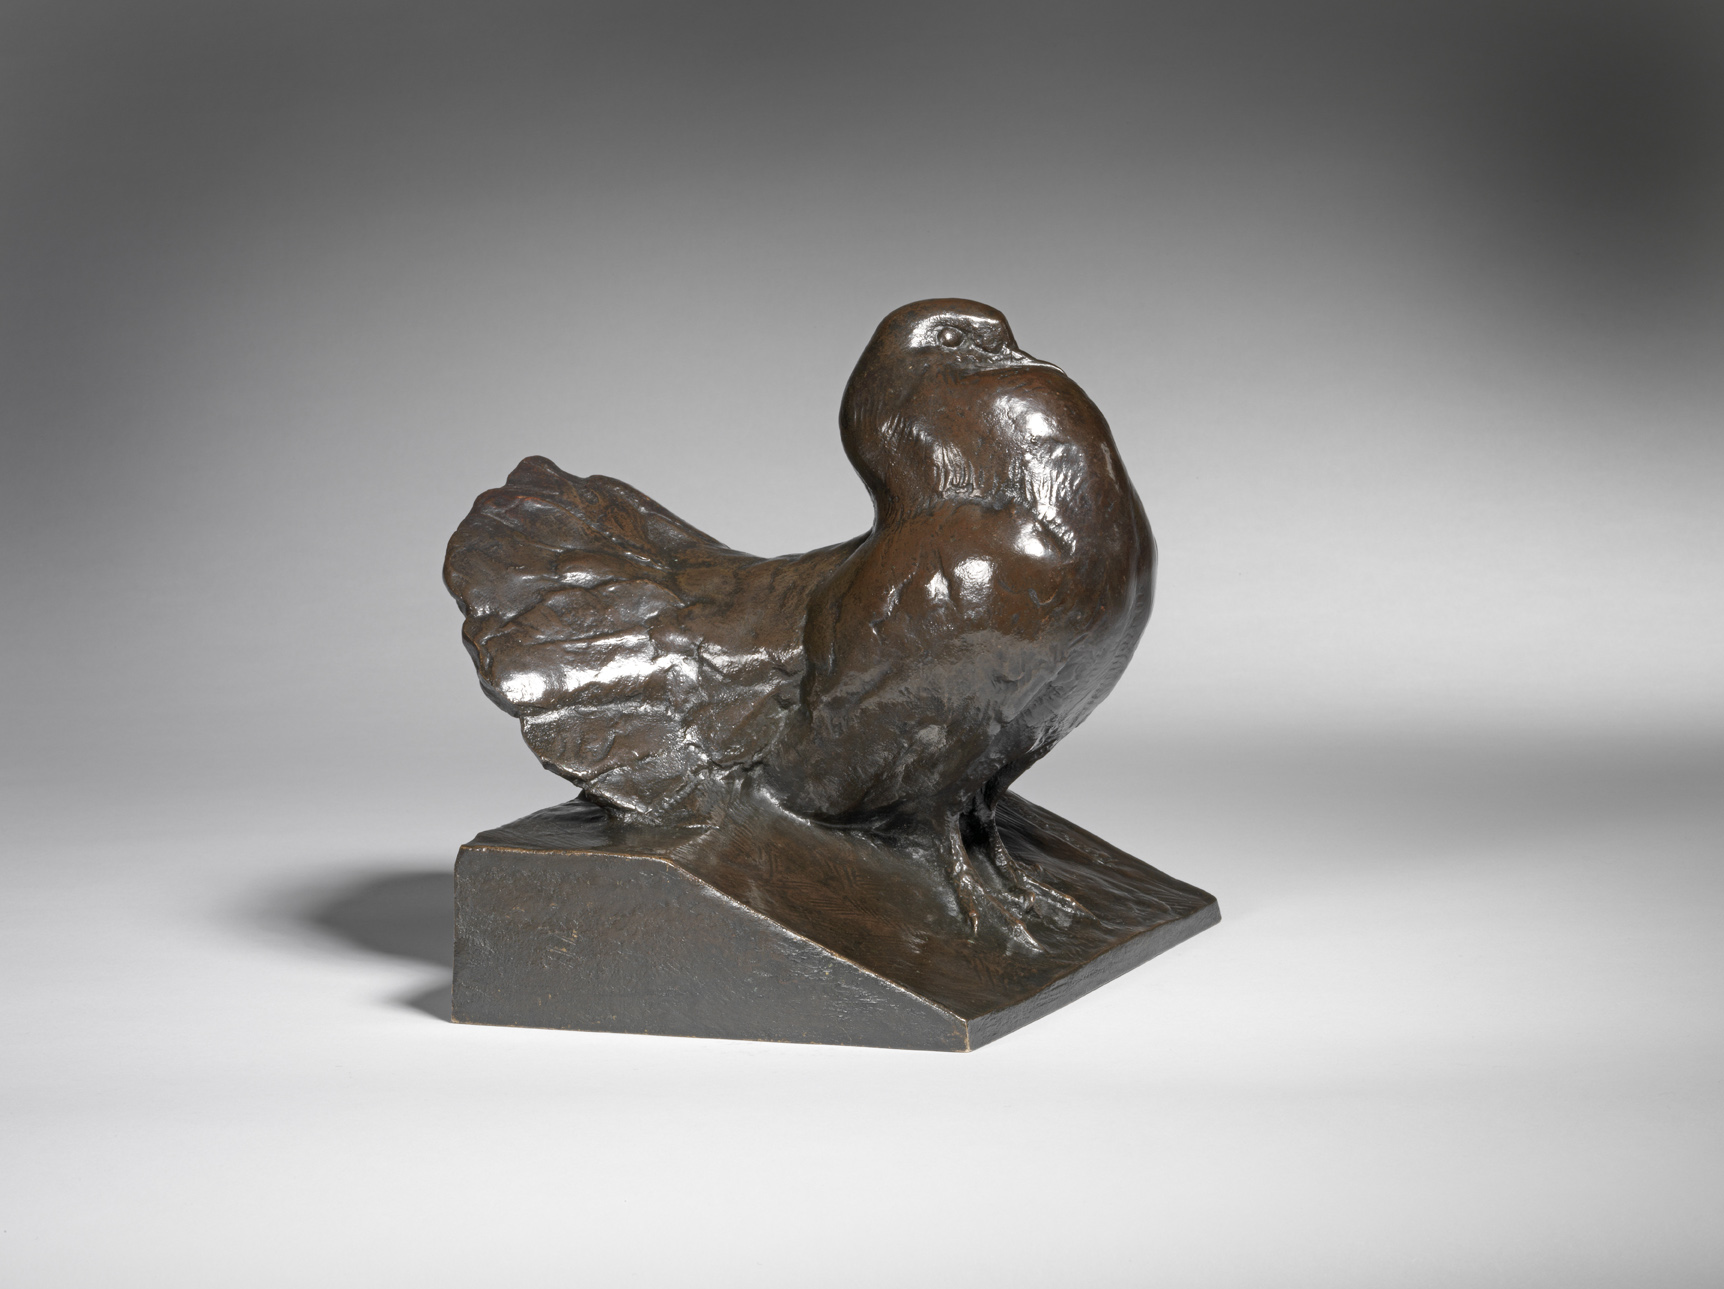 Fantail Pigeon, c. 1930